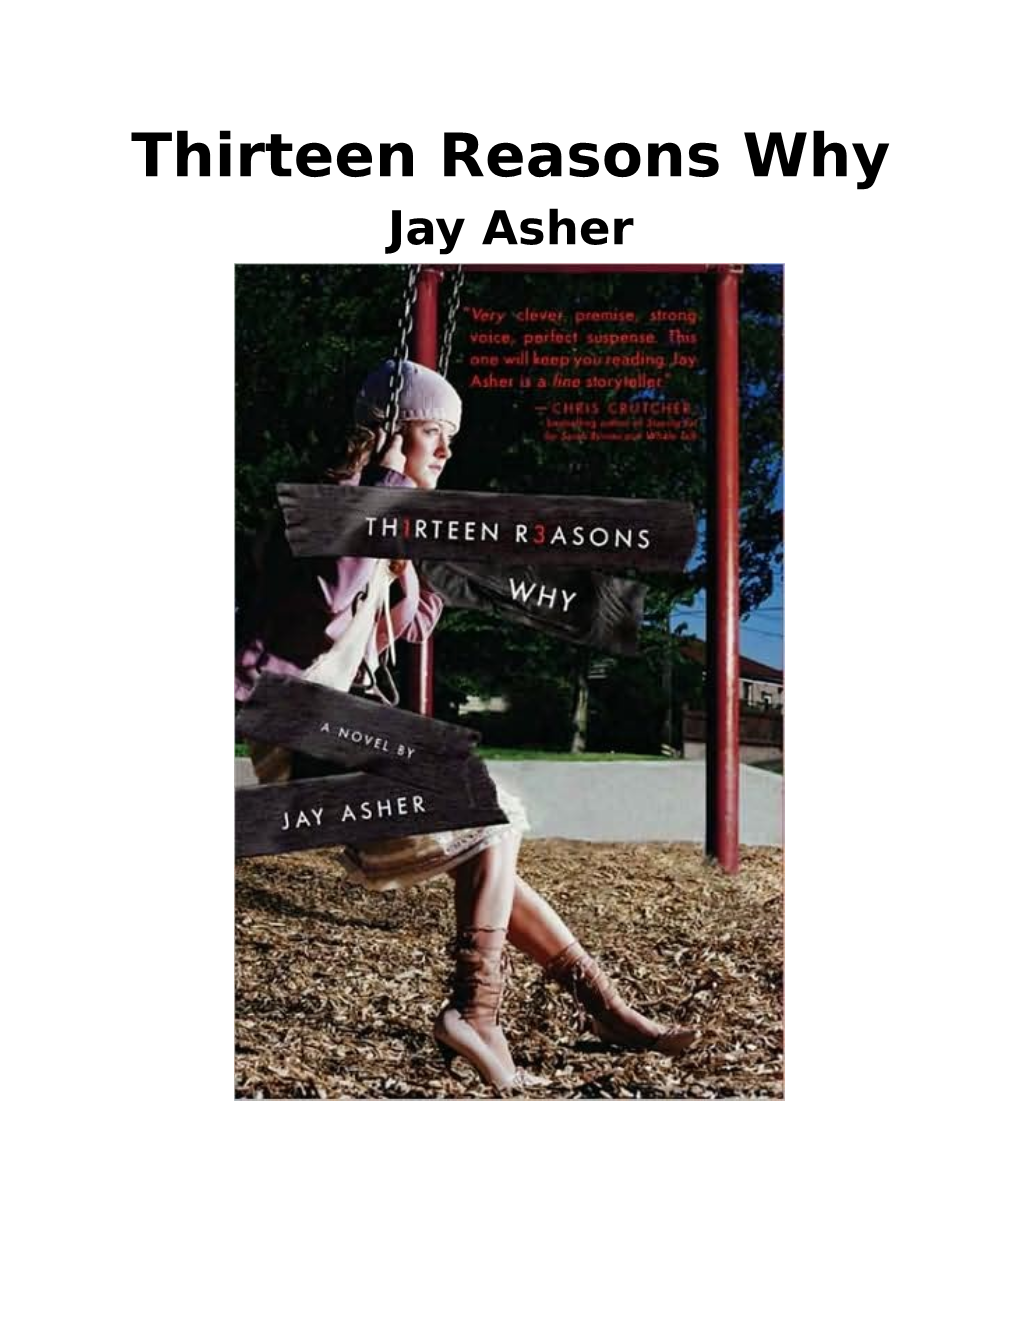 Thirteen Reasons Why Jay Asher TH1RTEEN R3ASONS WHY TH1RTEEN R3ASONS WHY a NOVEL by JAY ASHER